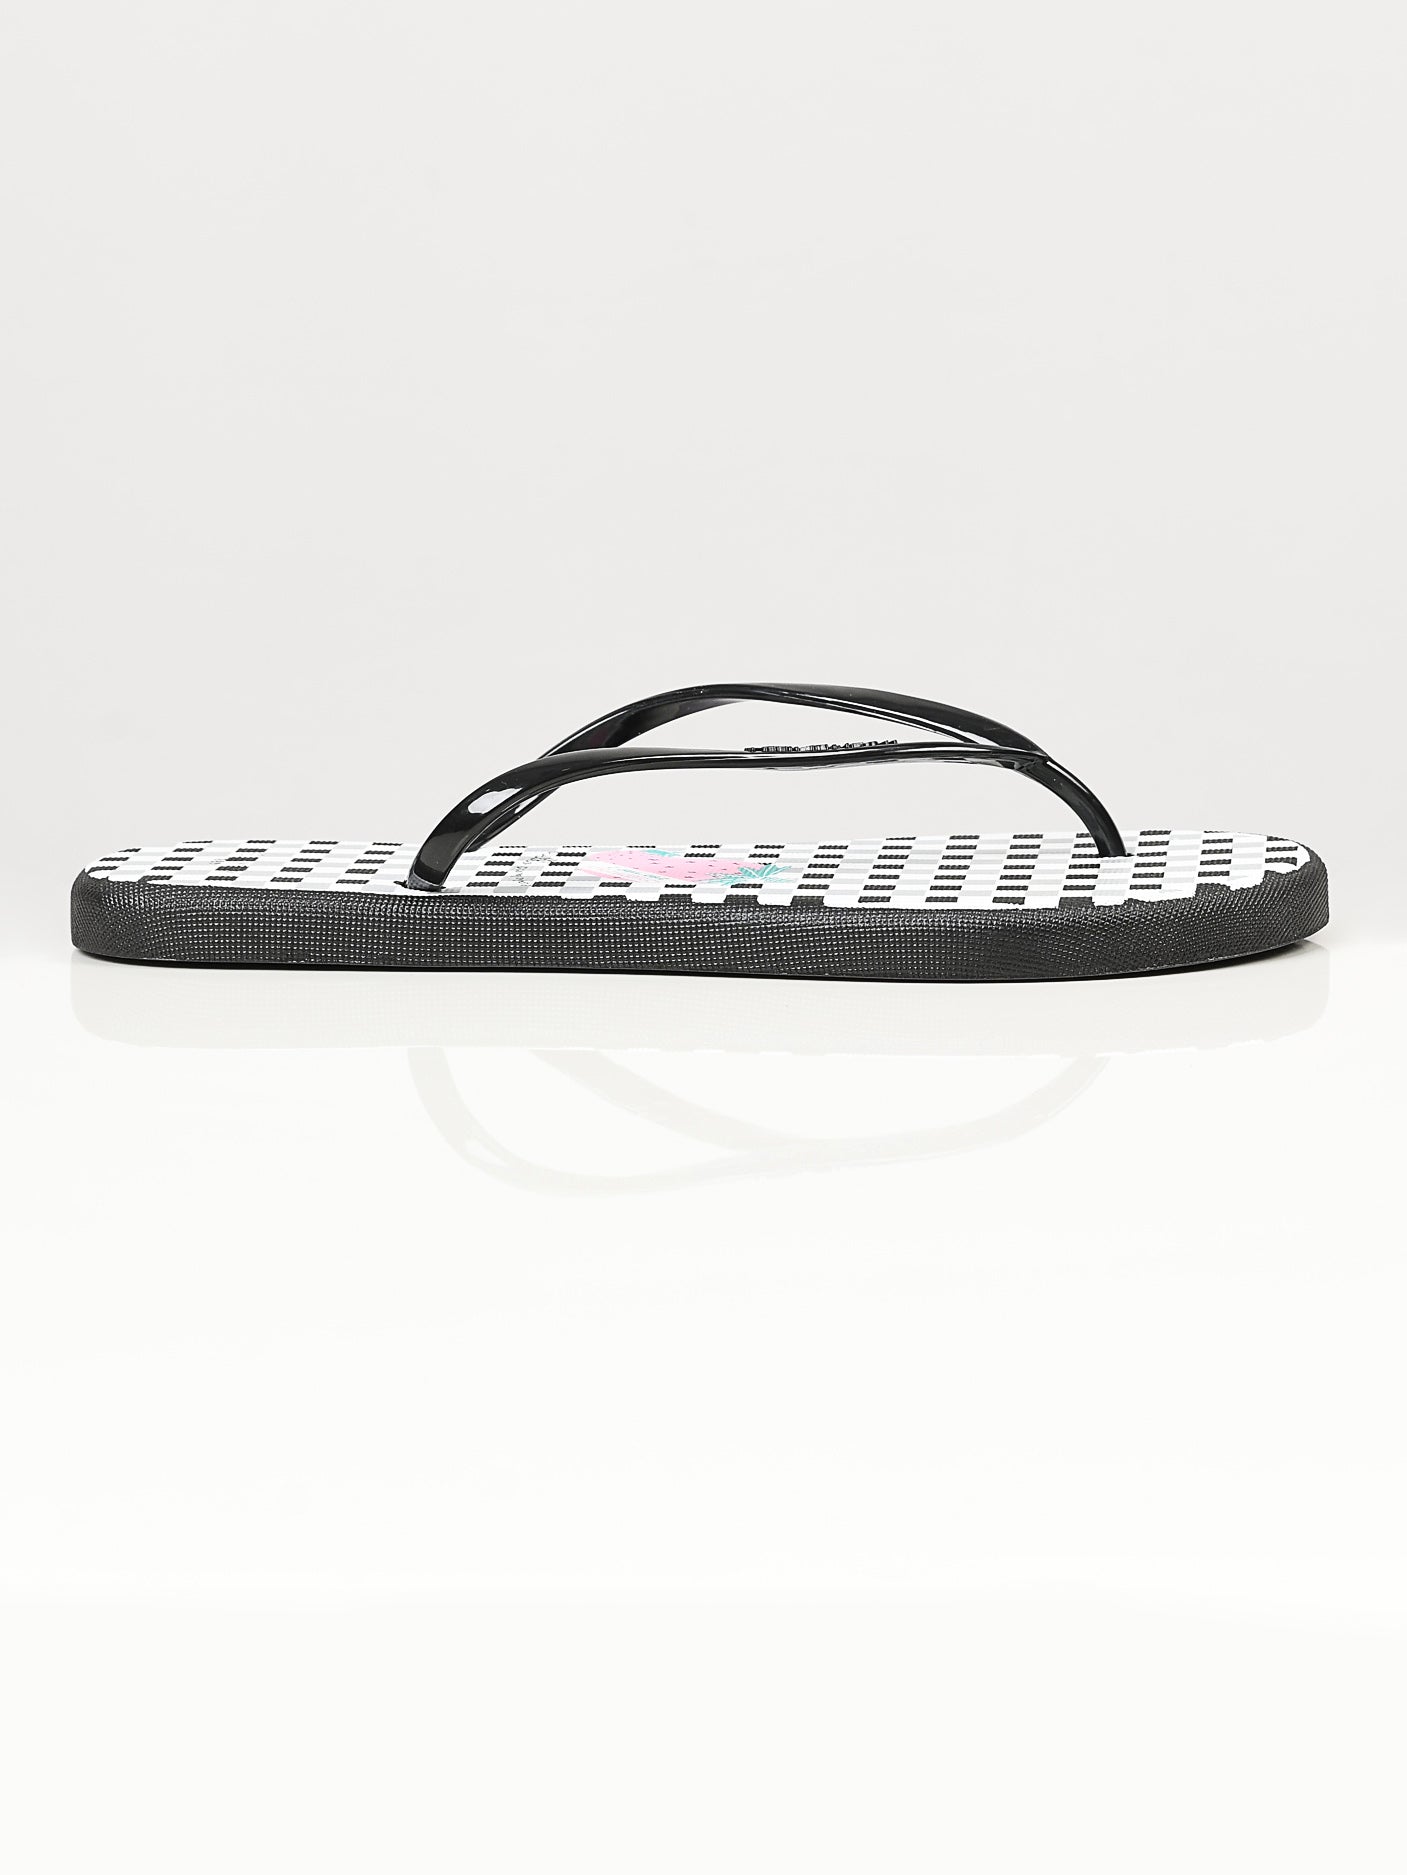 Printed Flip Flops - Black and White